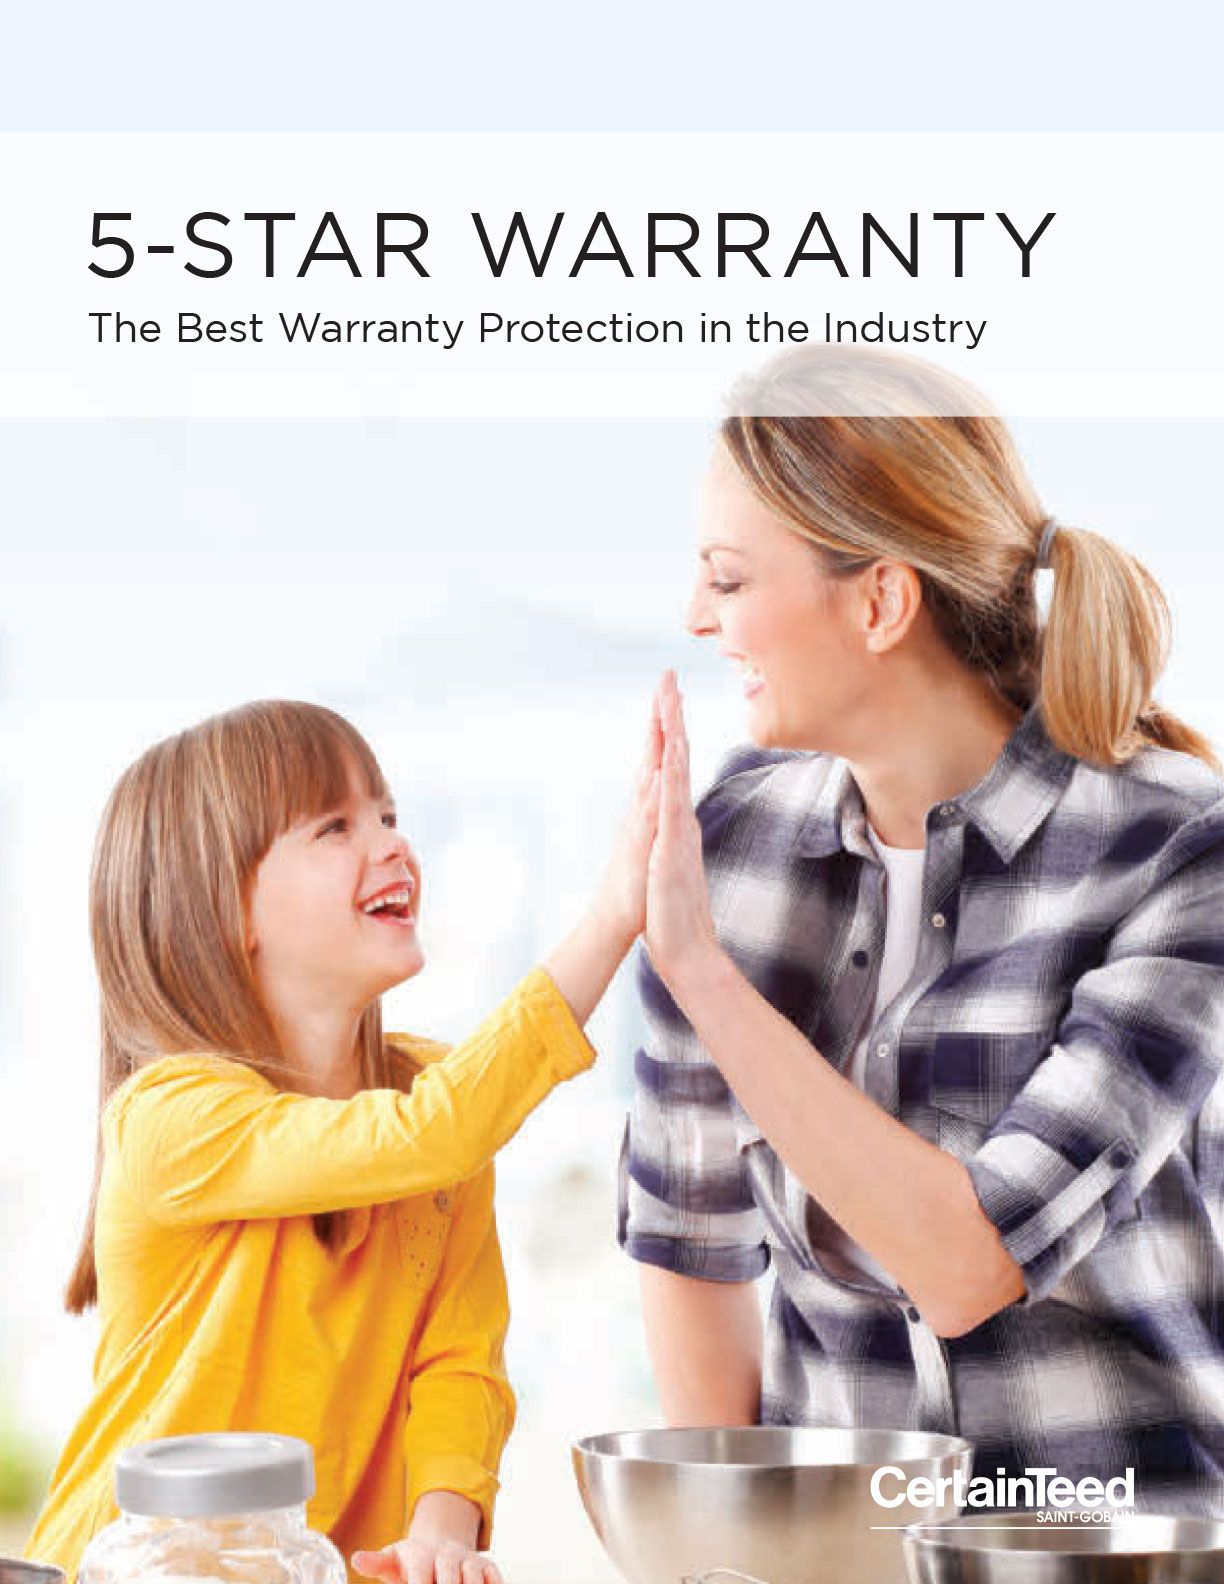 CertainTeed 5-Star Warranty Brochure